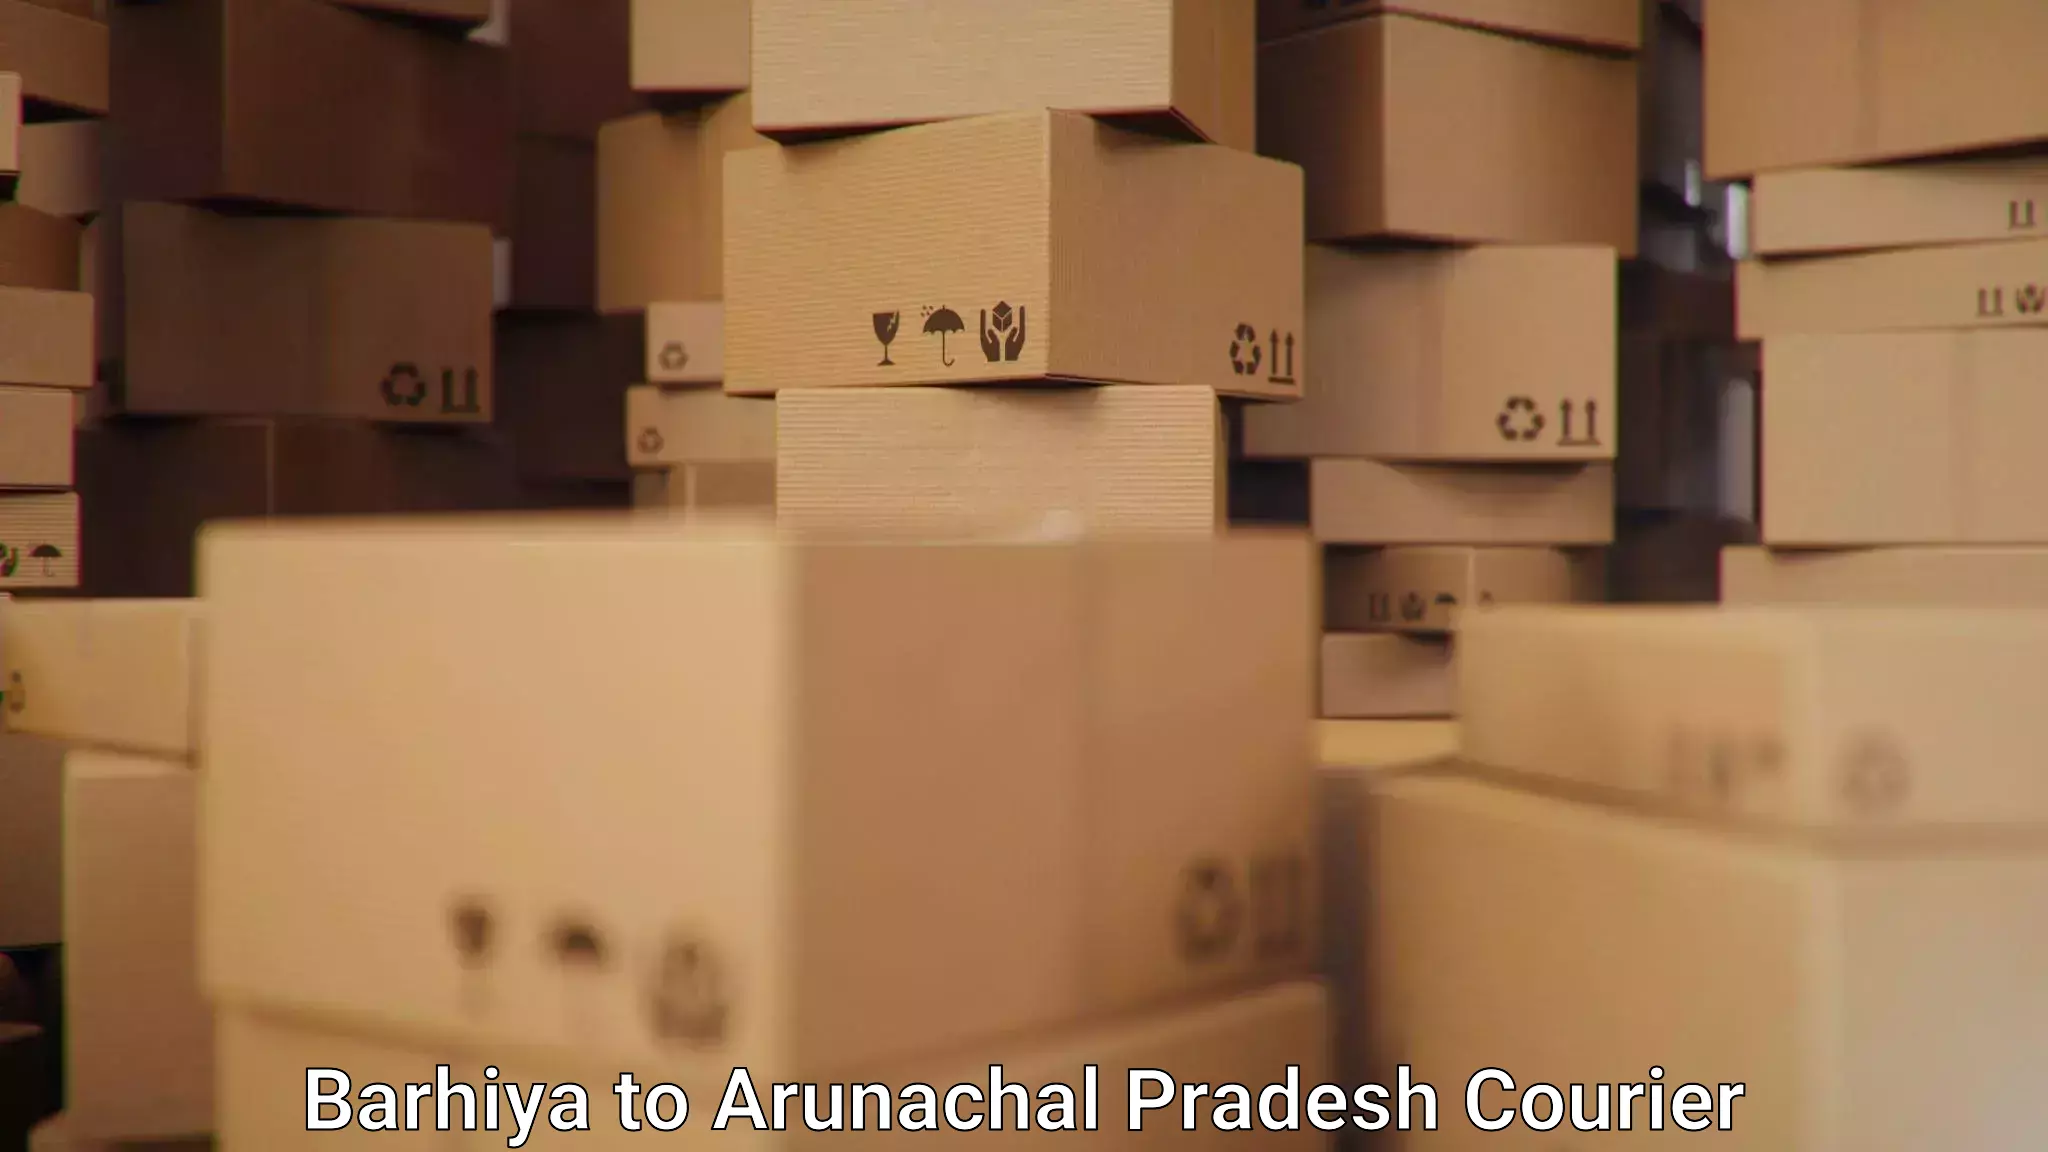 Reliable courier services in Barhiya to Arunachal Pradesh